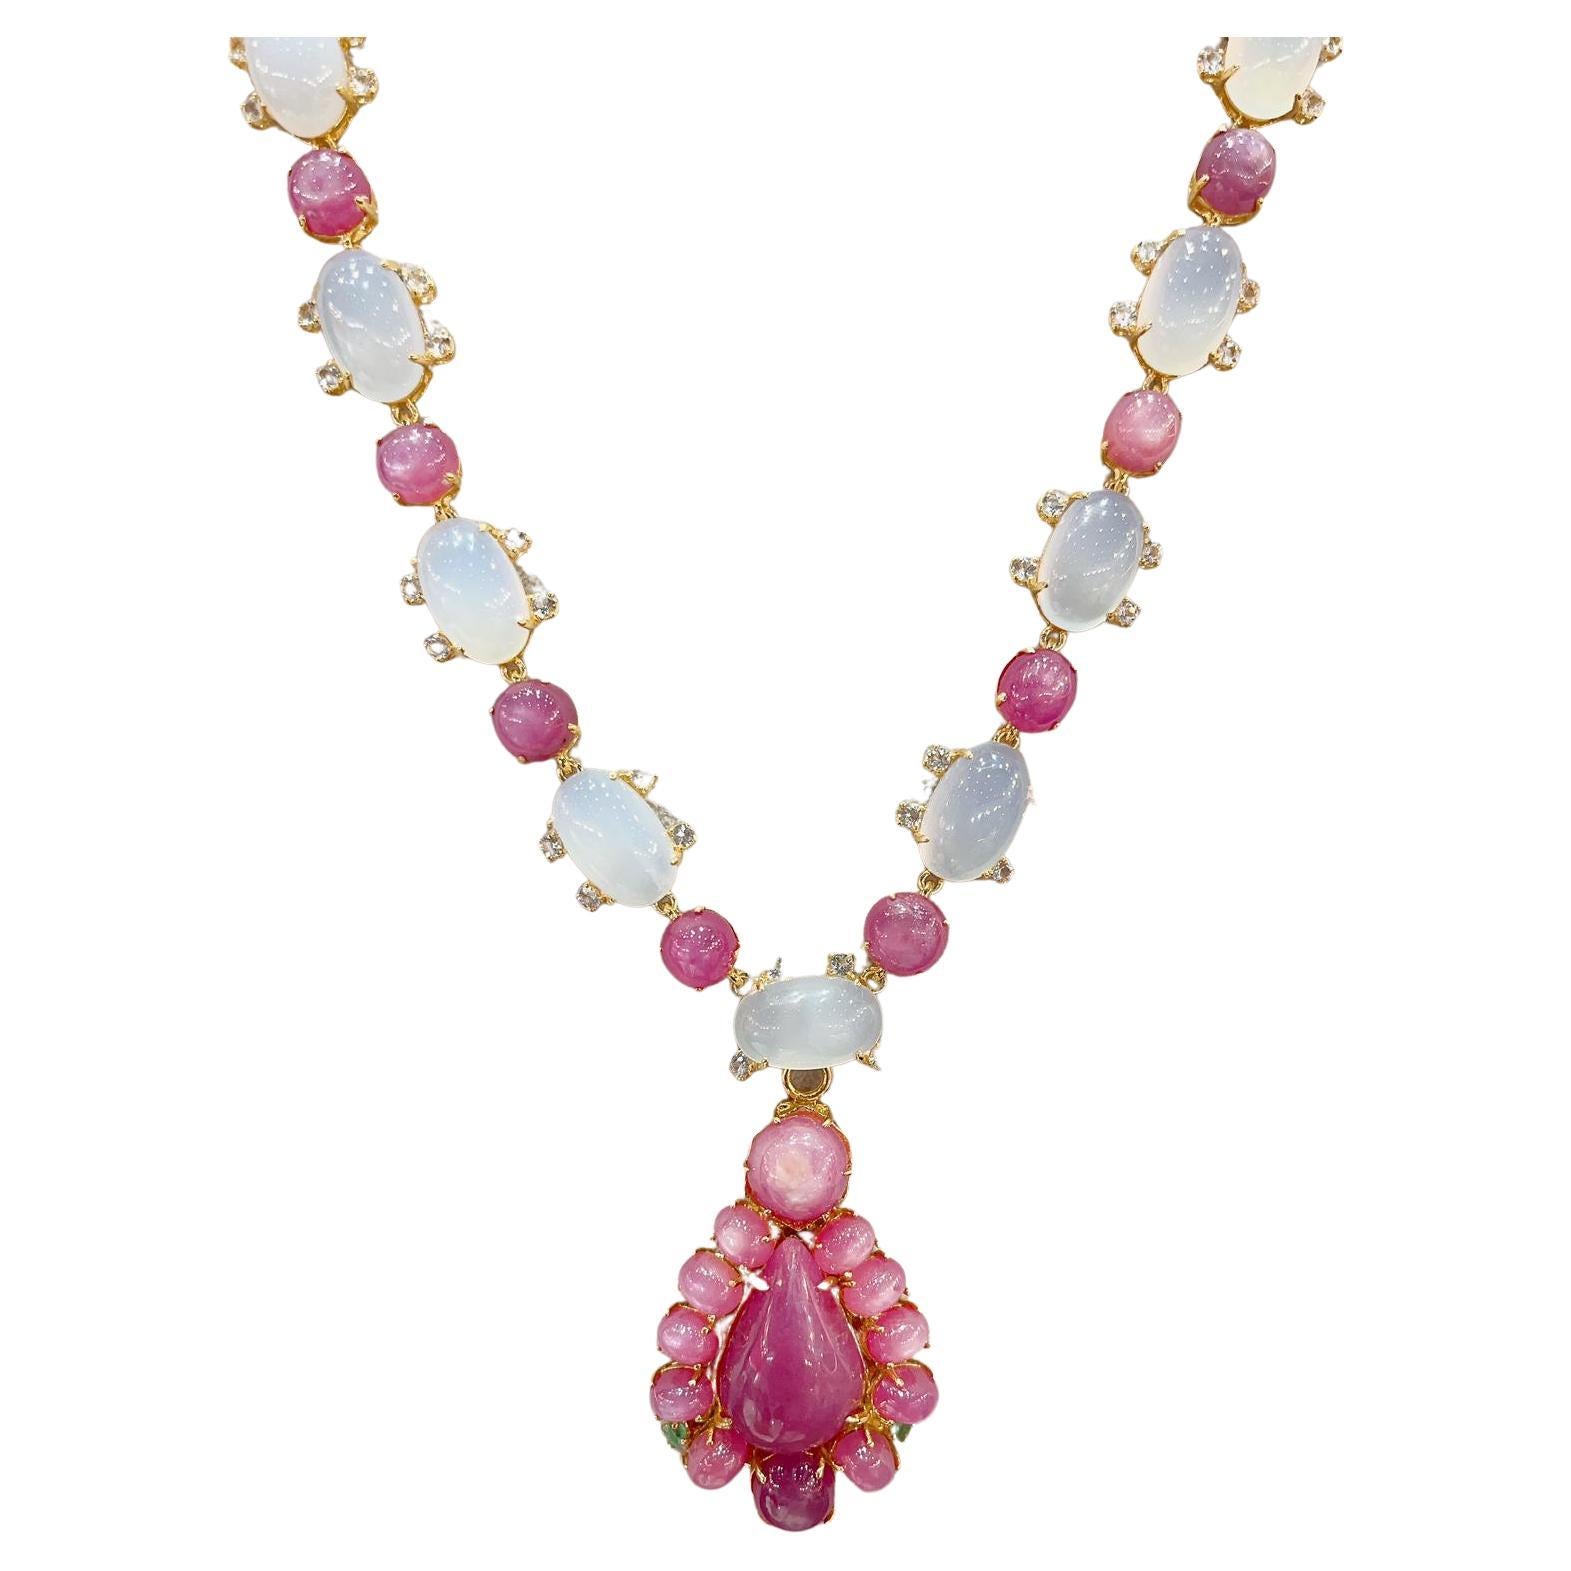 Bochic “Capri” Ruby & Carsidoni Stunning Necklace set in 22K Gold & Silver 